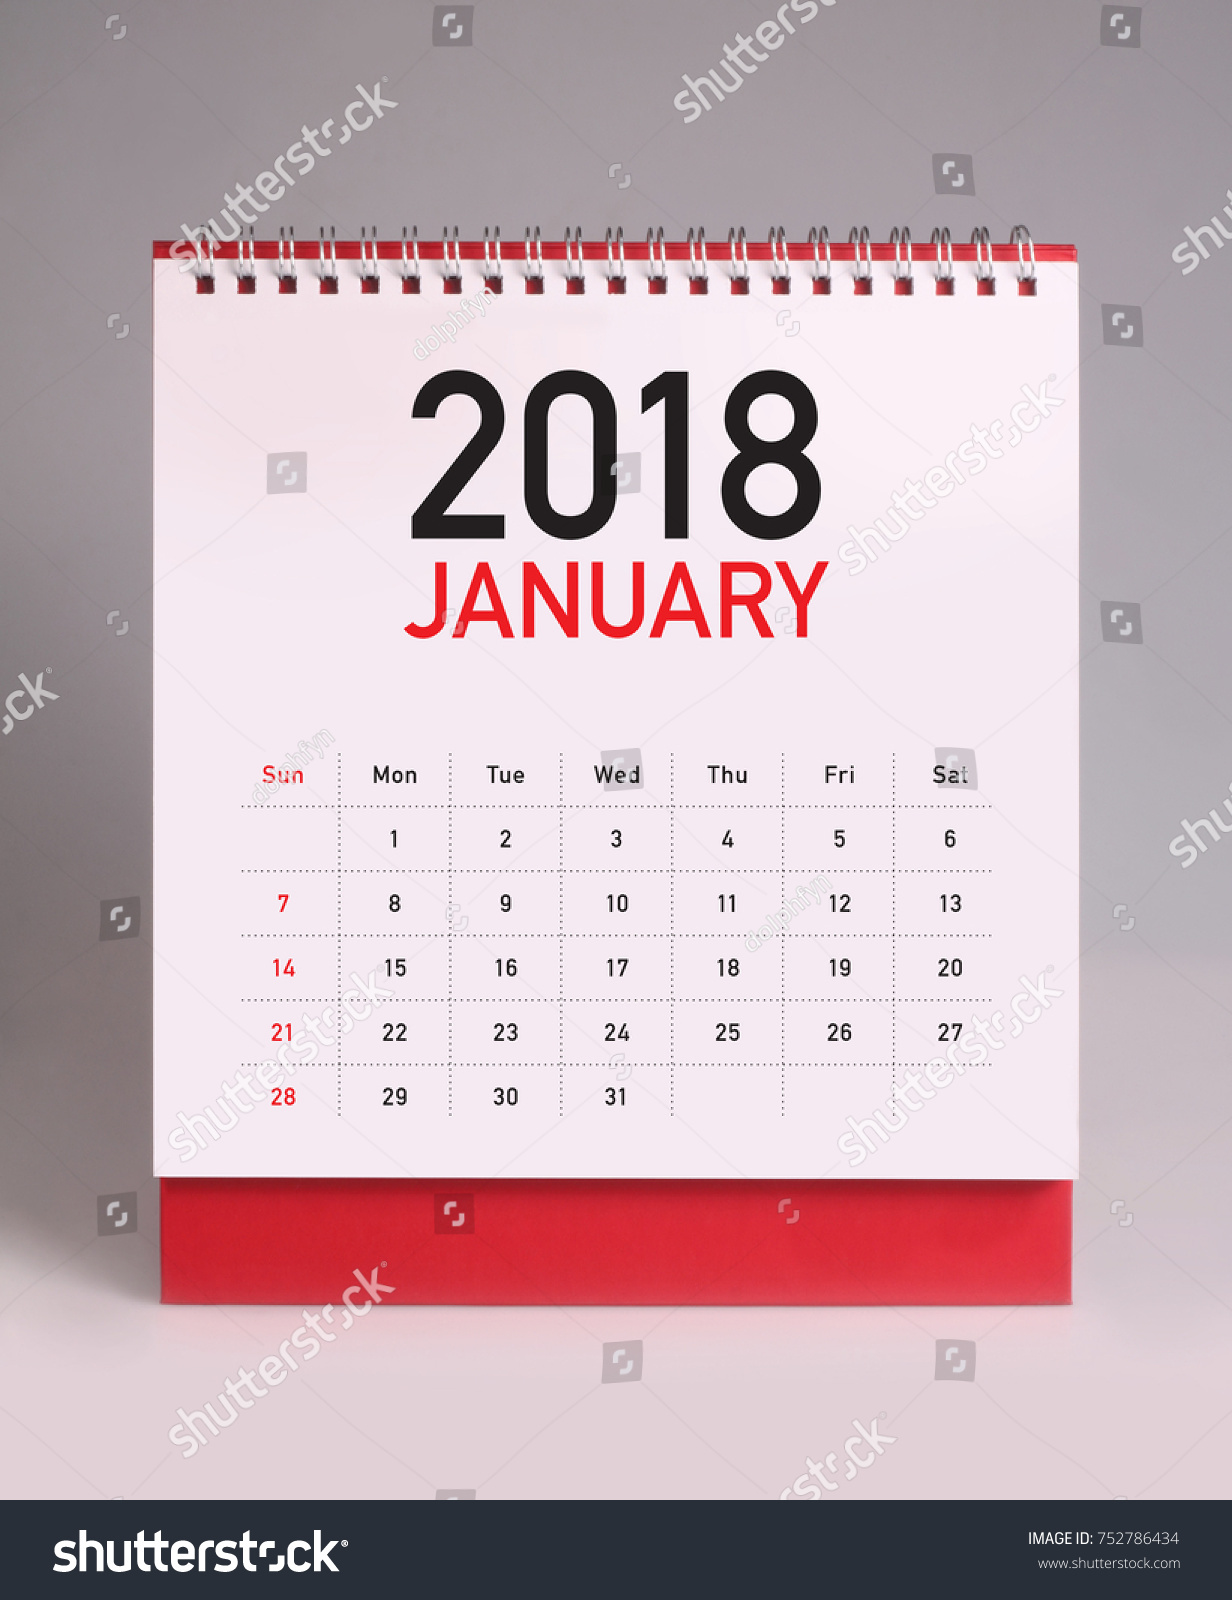 Simple desk calendar for January 2018 #752786434